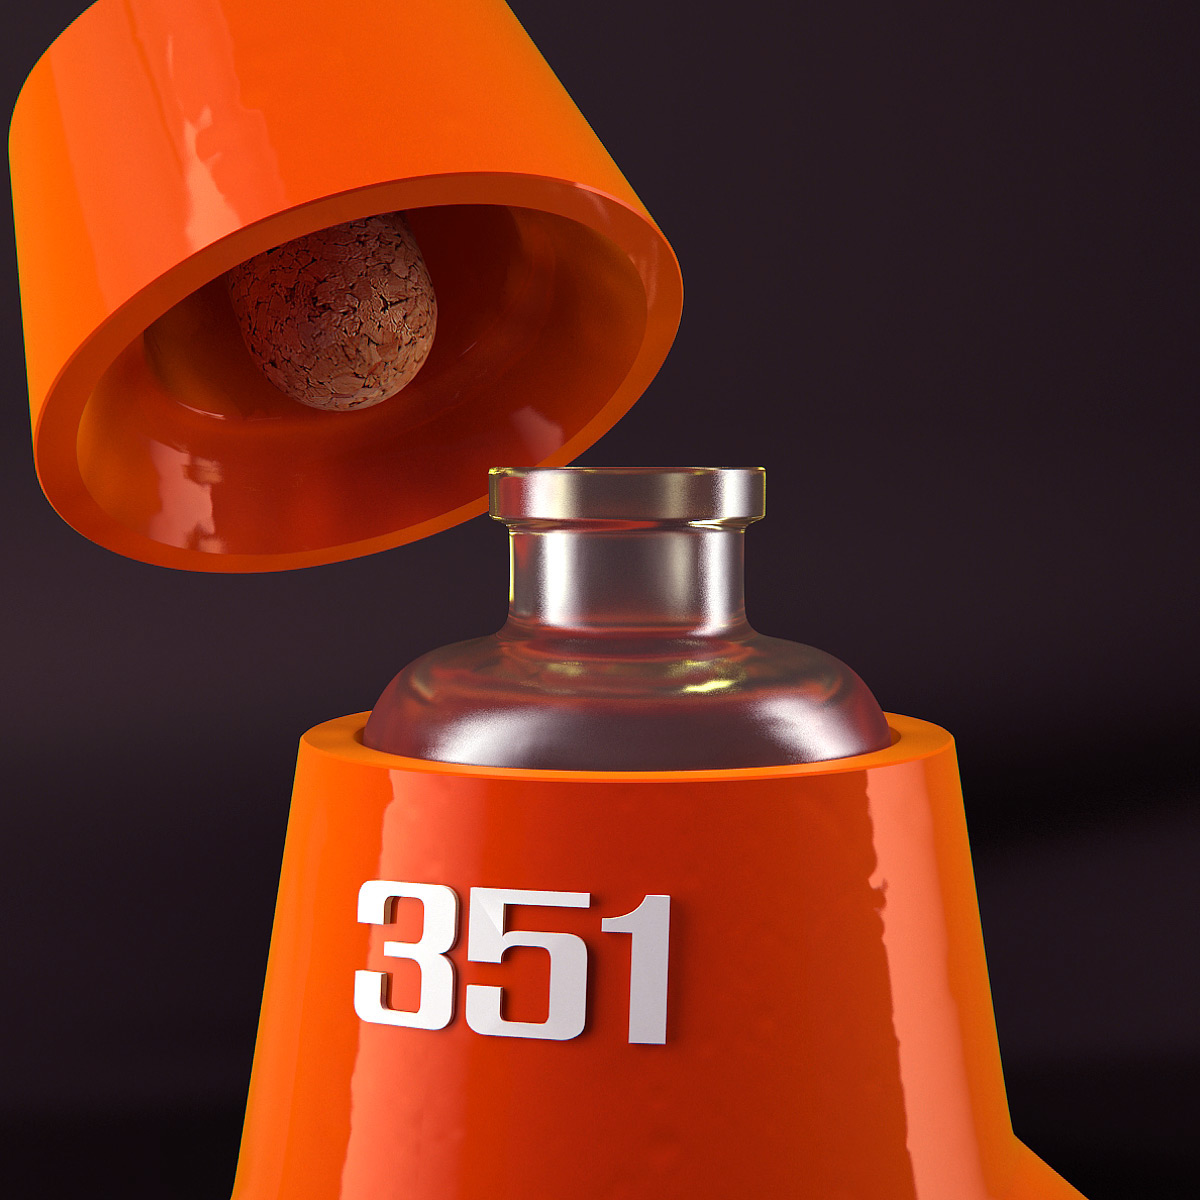 tetrapod 3D Render visualisation bottle Vodka orange glass alcohol 531